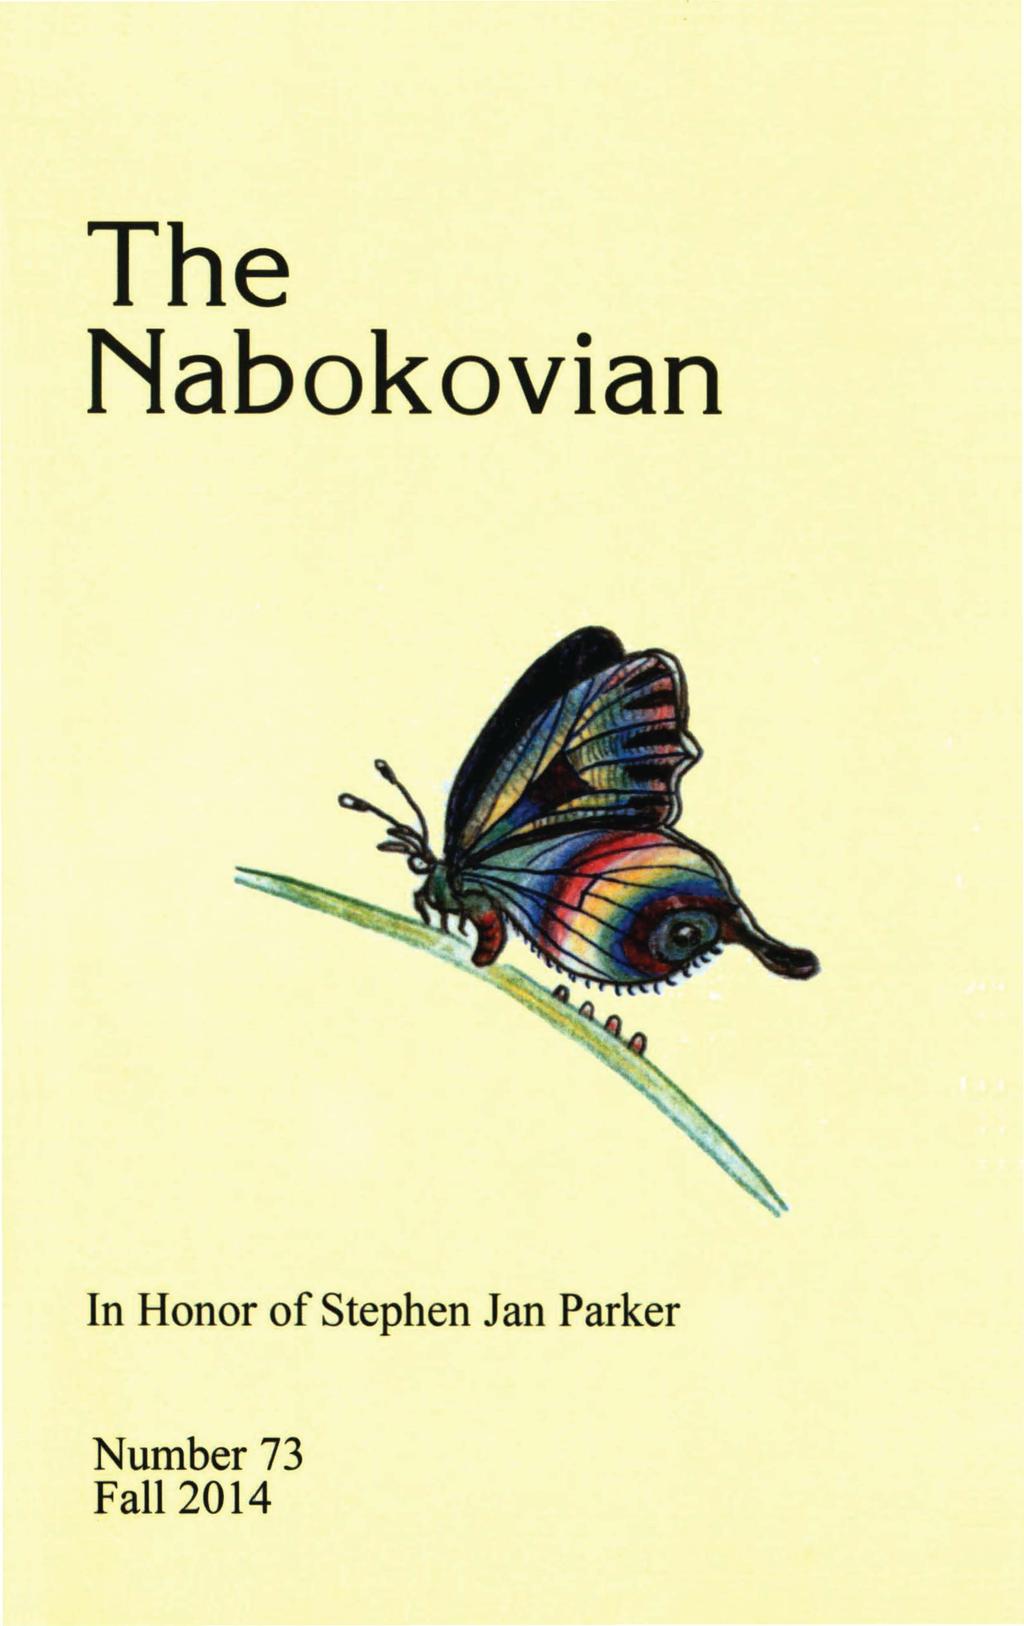 The Nabokovian In Honor of